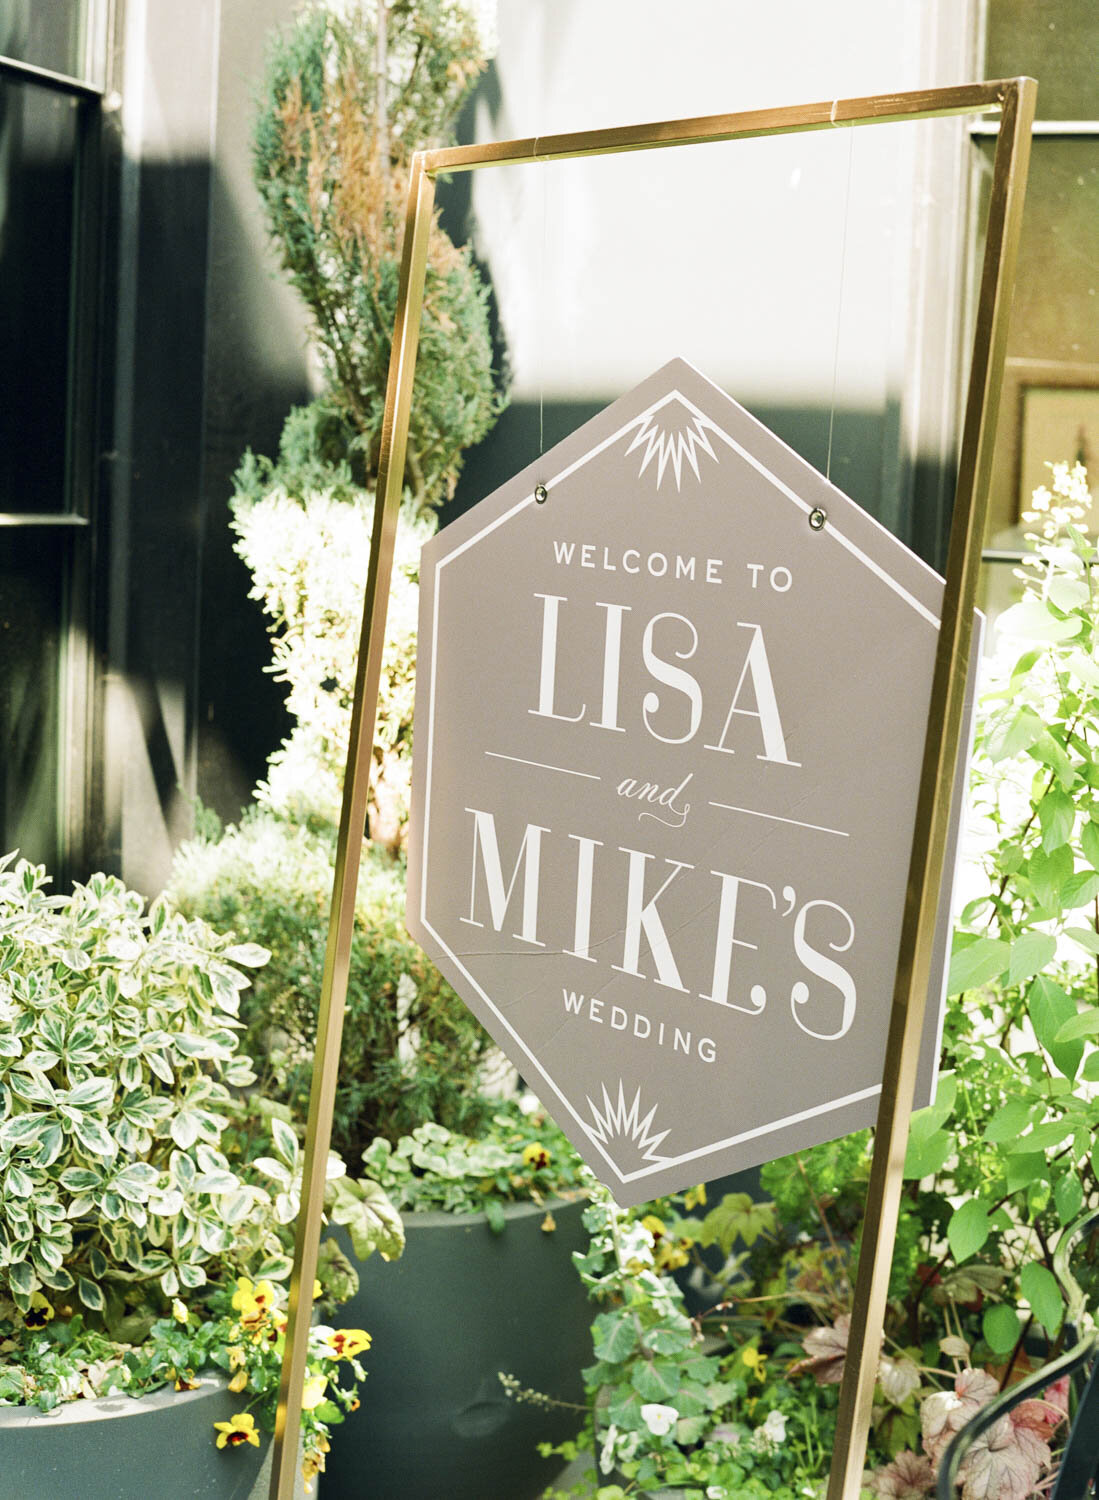 sagamore pendry hotel wedding with Lisa Blume Photography